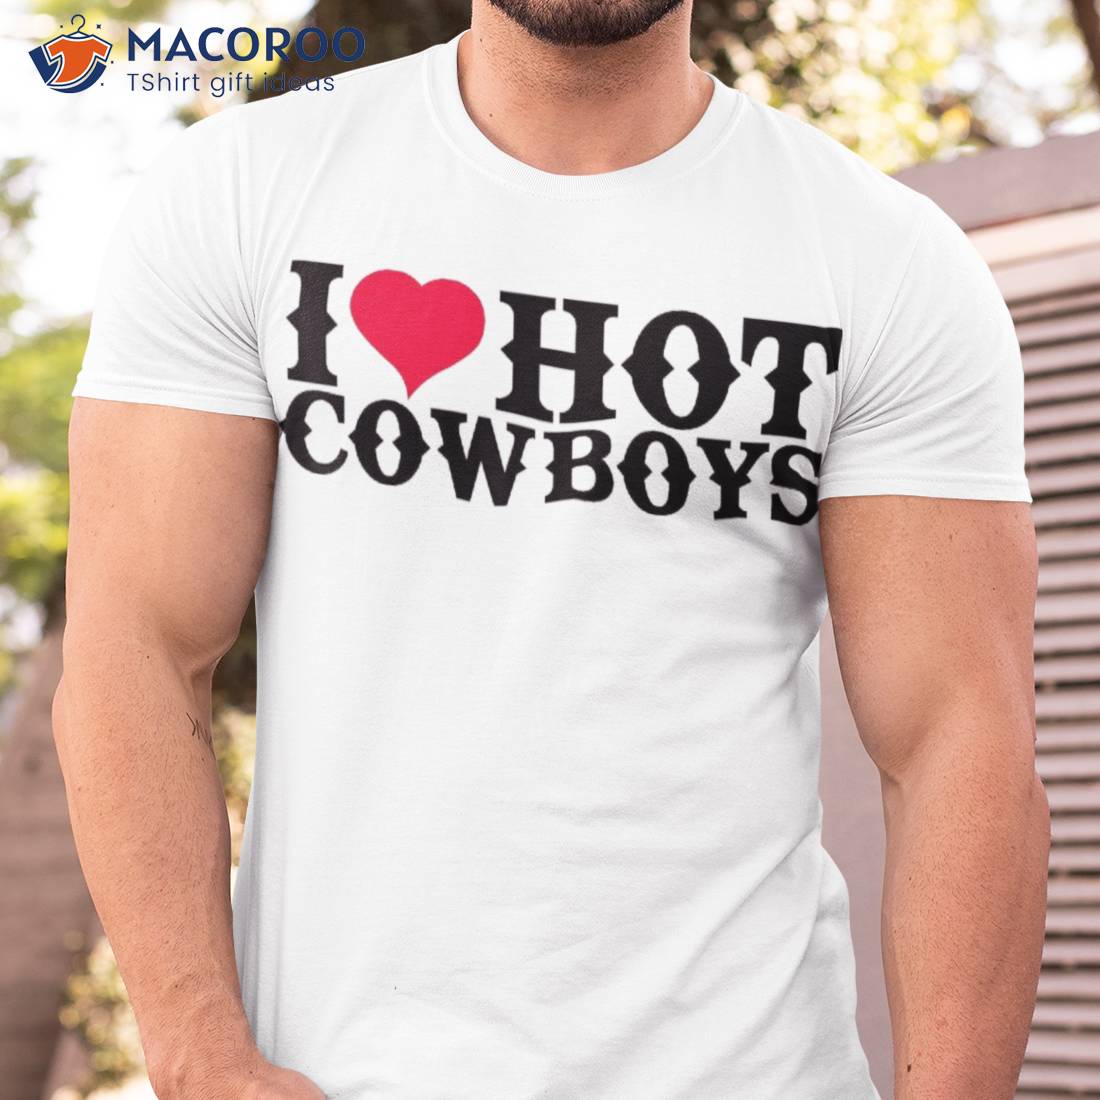 dallas cowboys shirt funny